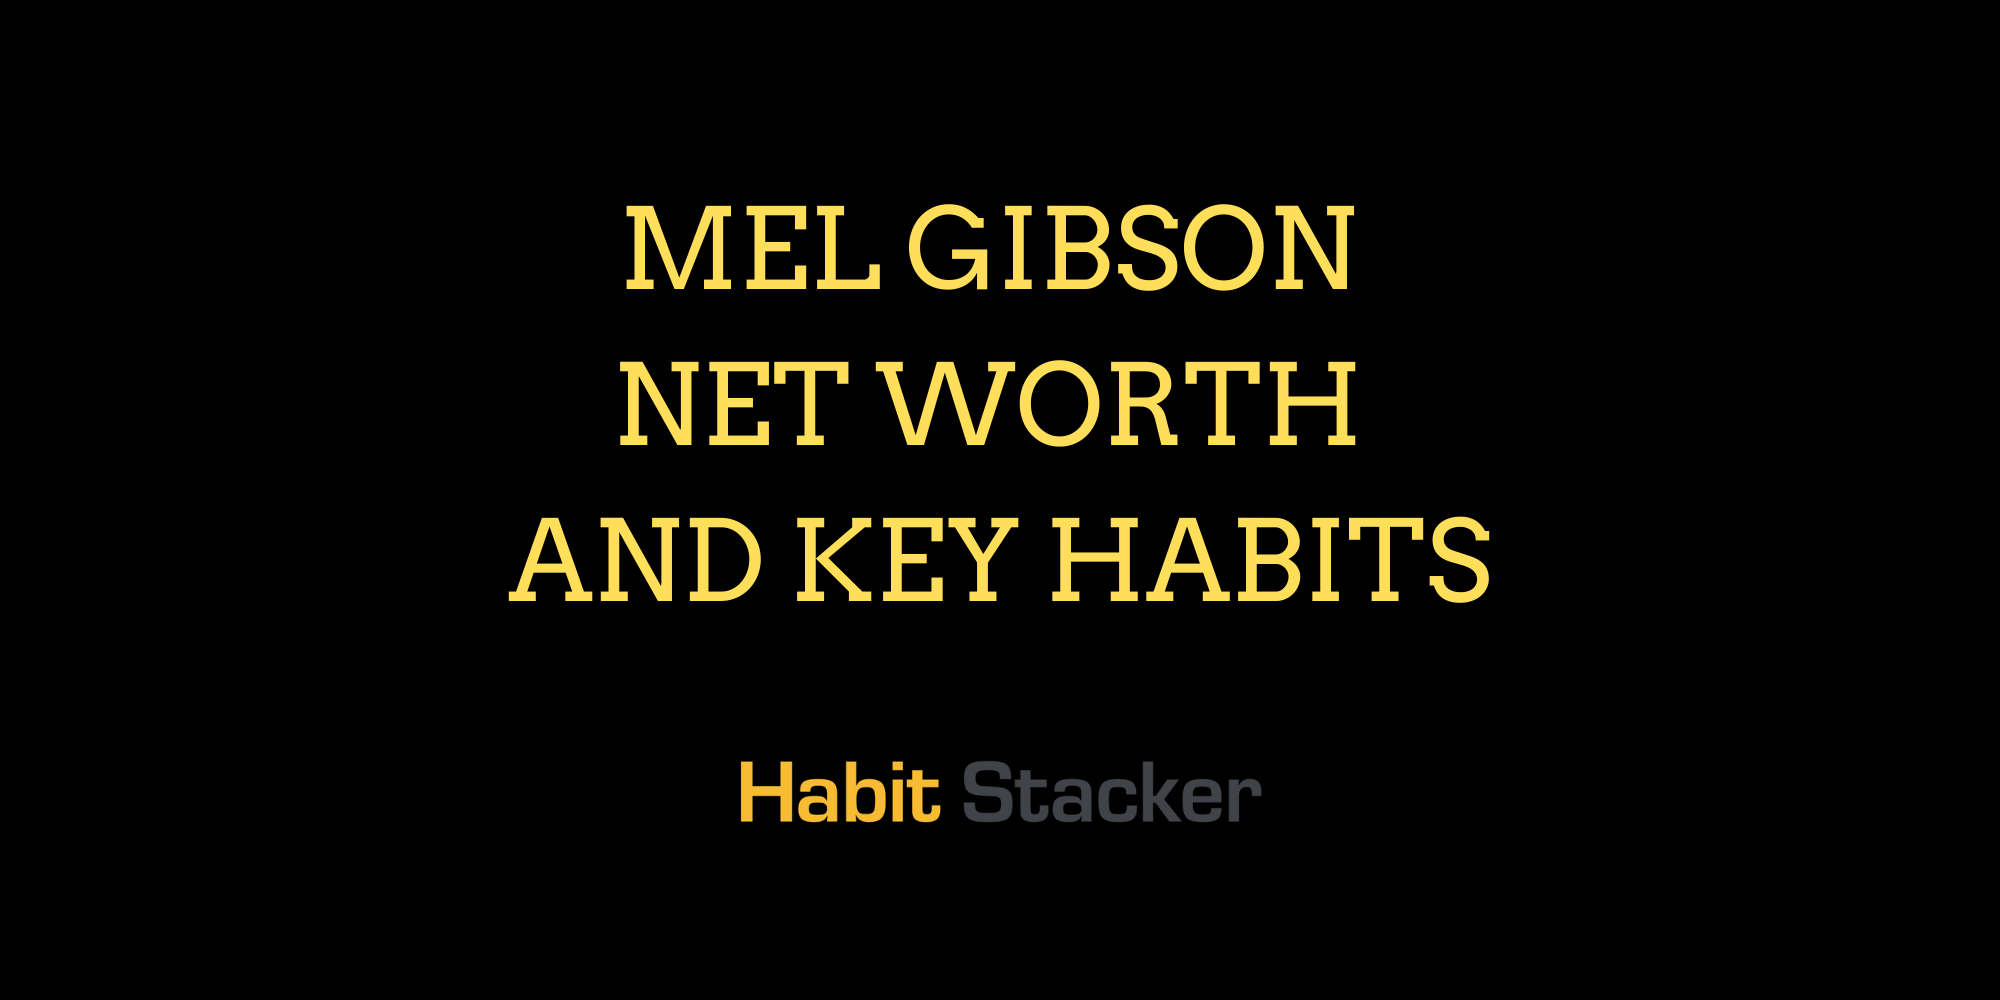 Mel Gibson Net Worth and Key Habits